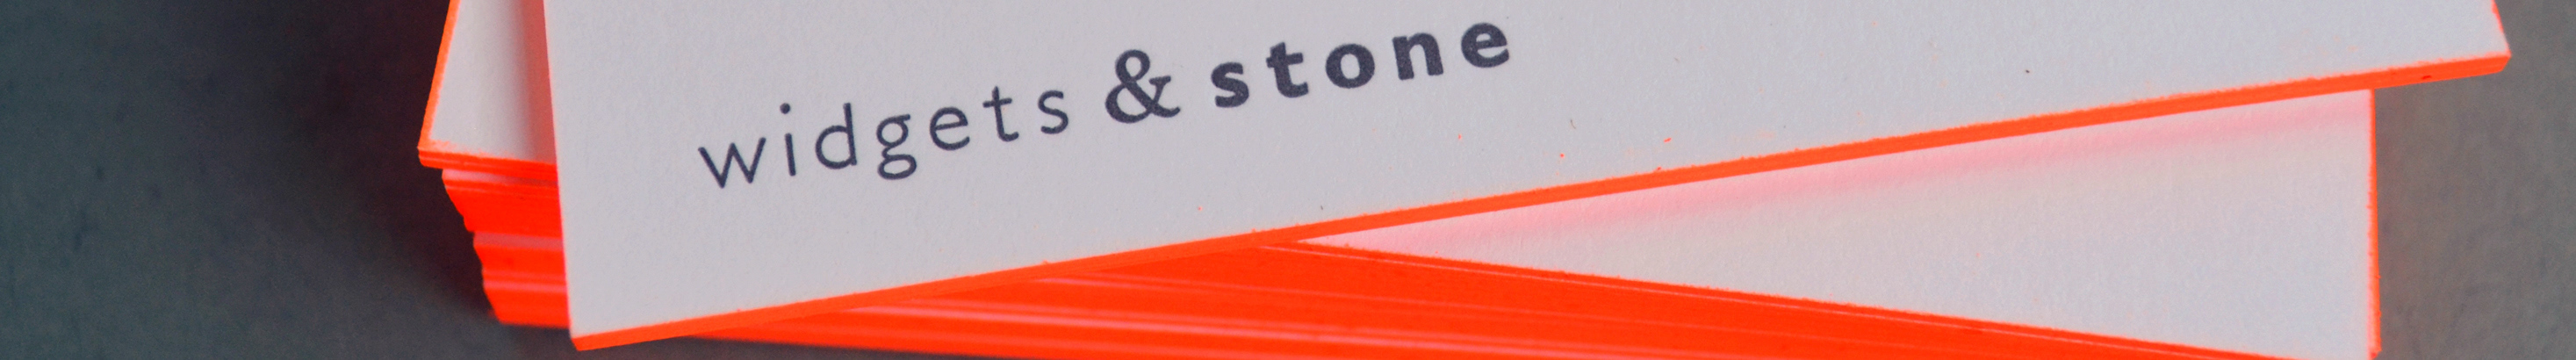 Widgets & Stone's profile banner